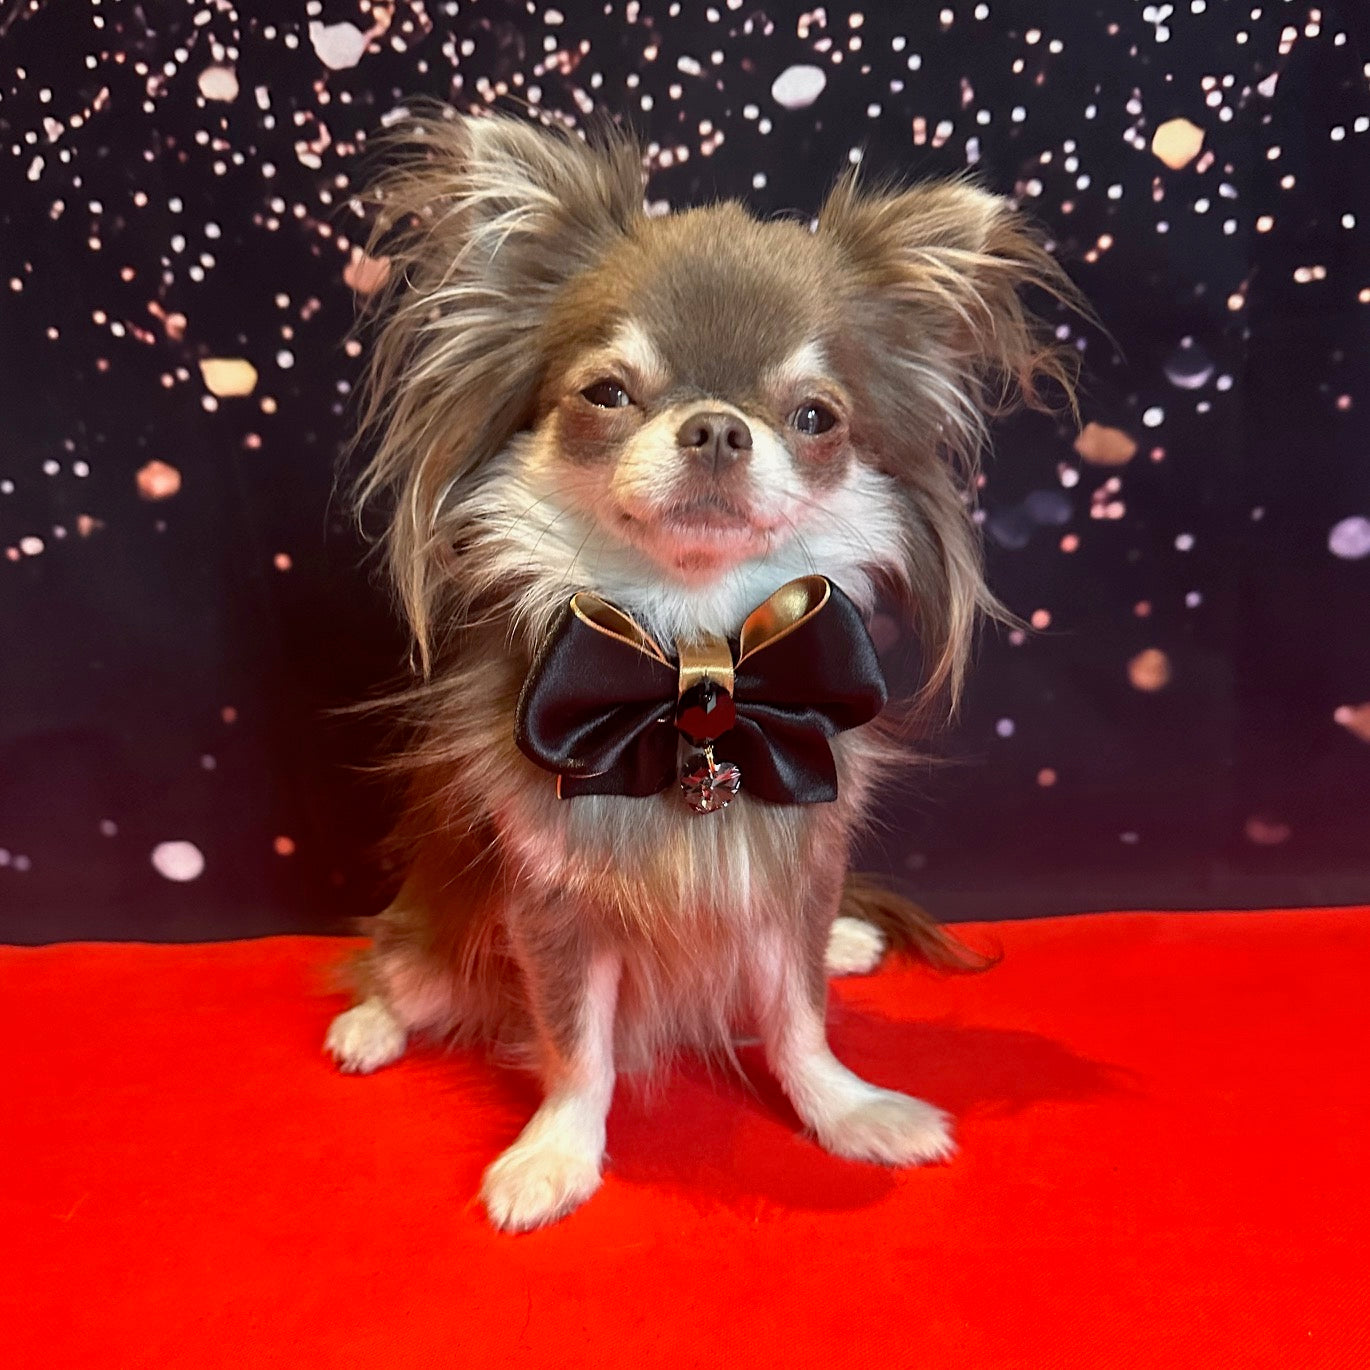 The Oscars Clara Bow, Petite